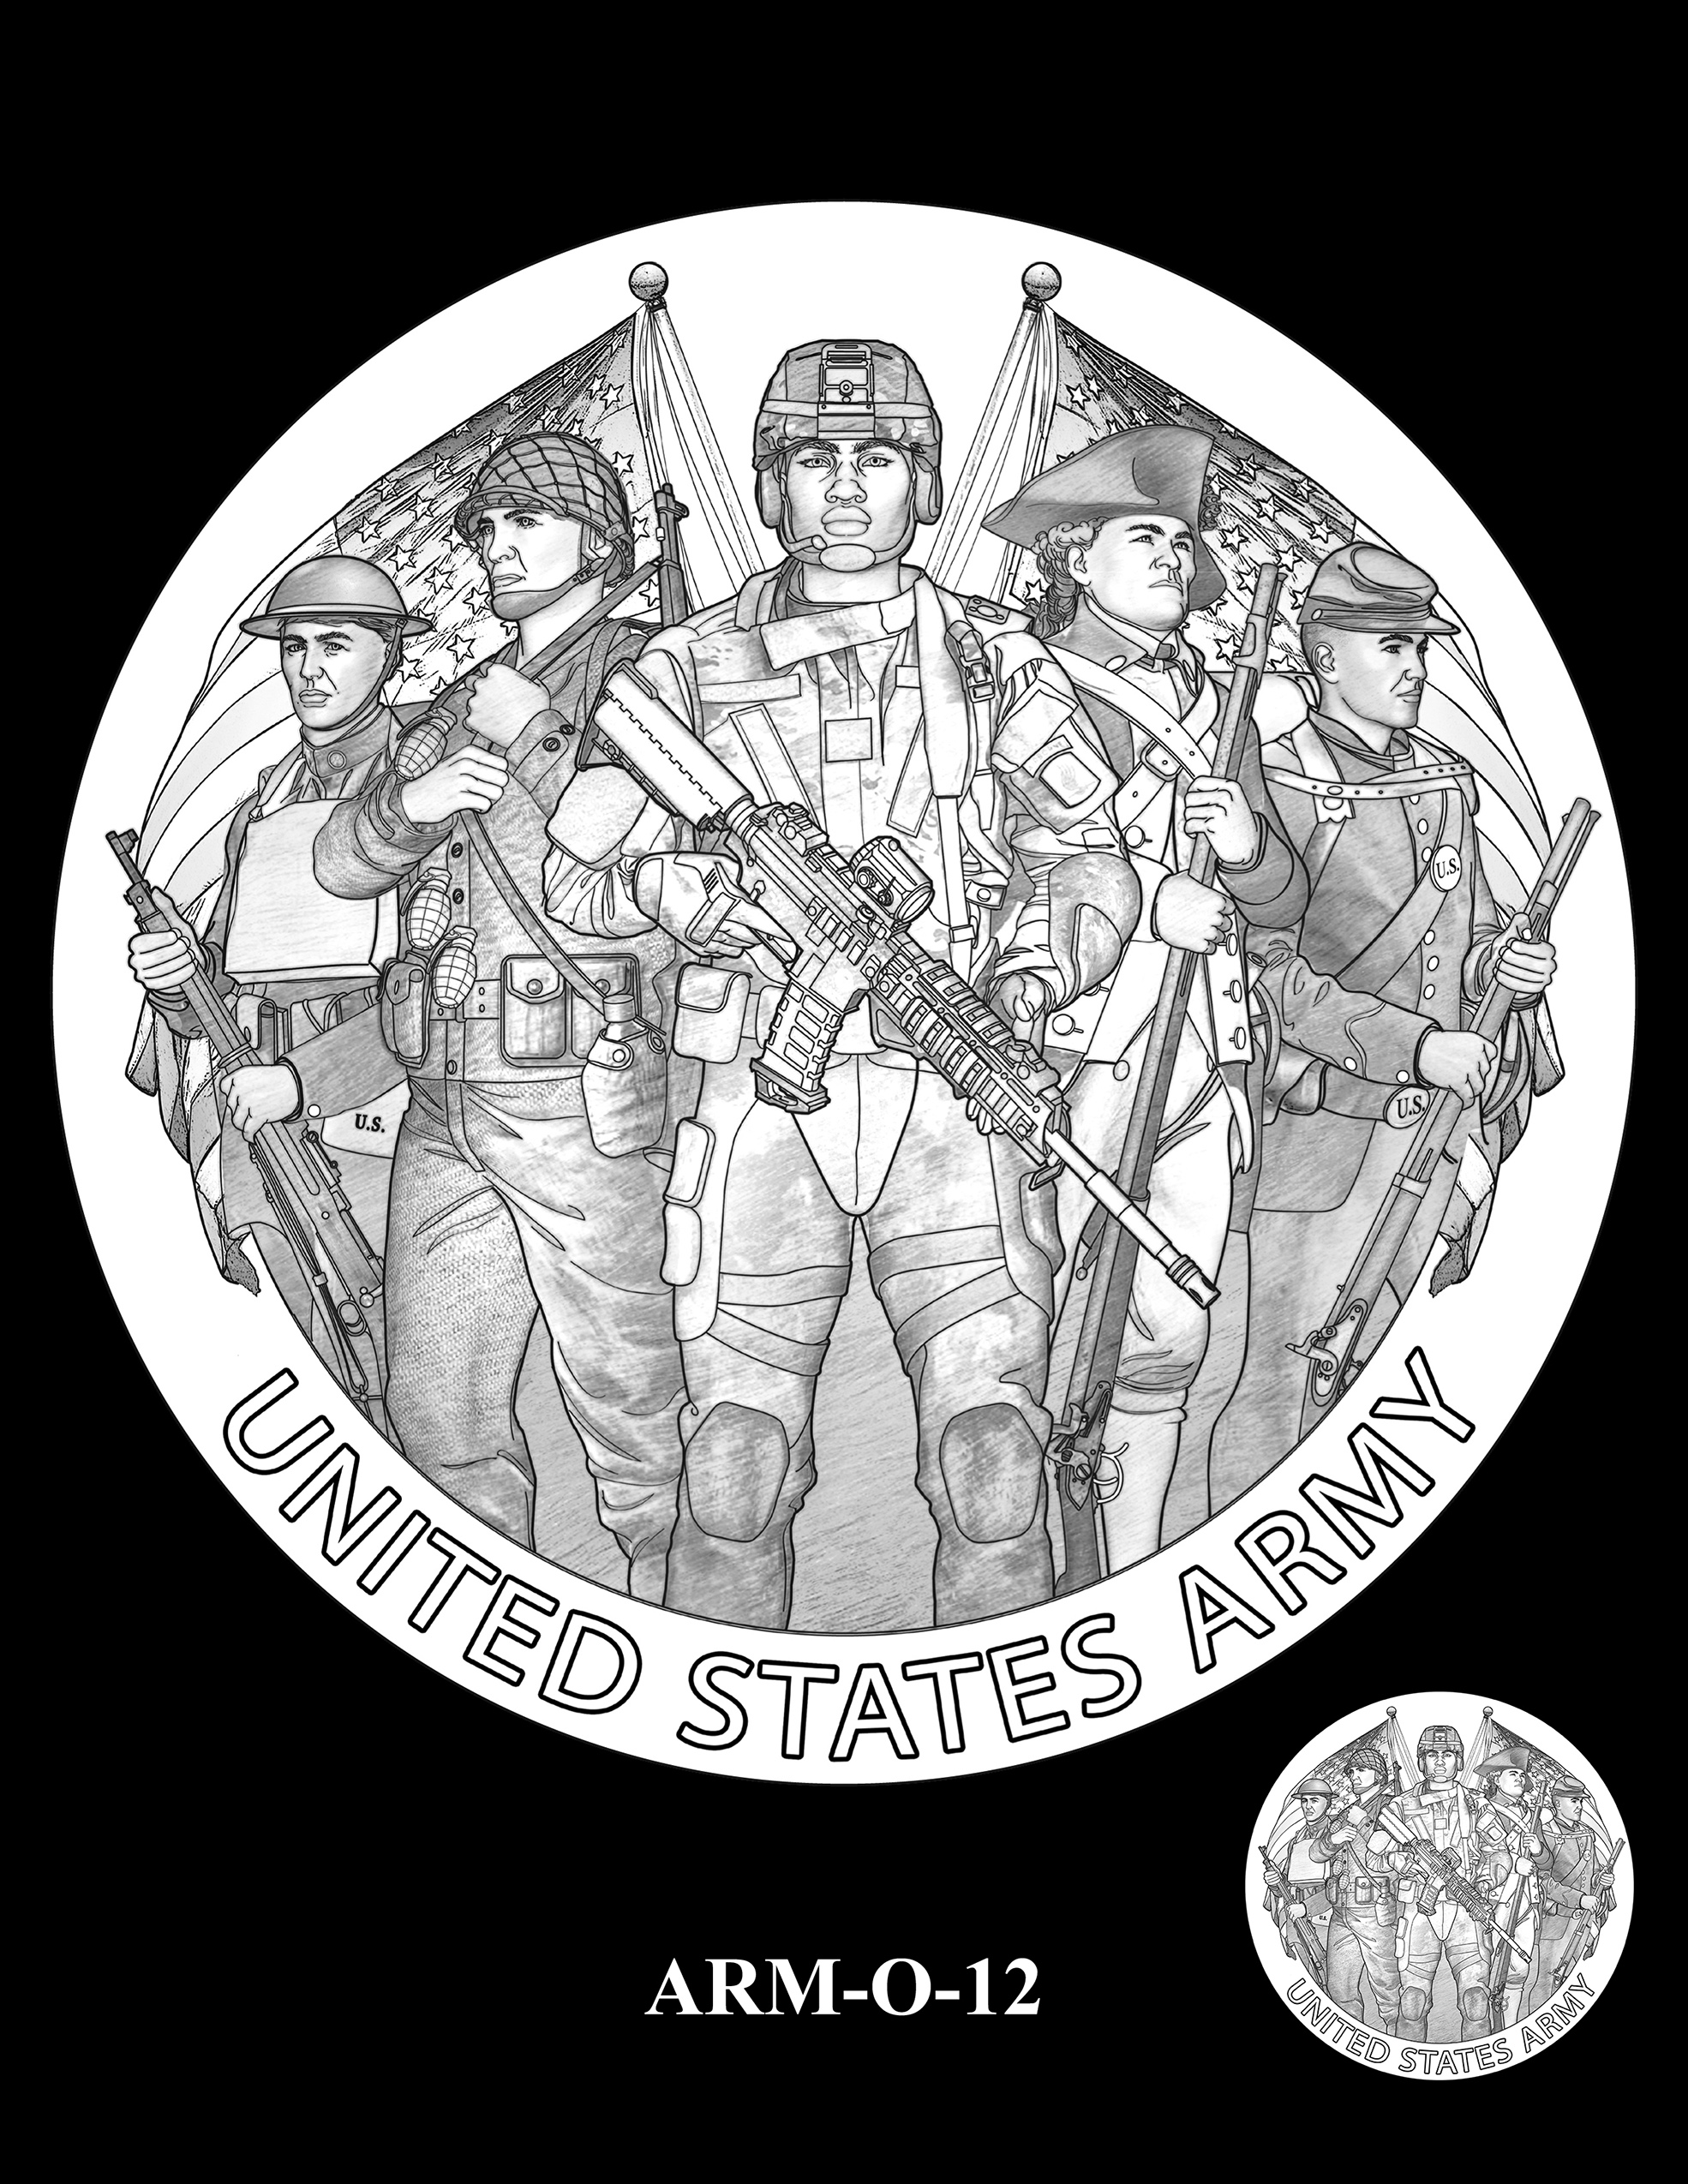 ARM-O-12 -- United States Army Silver Medal